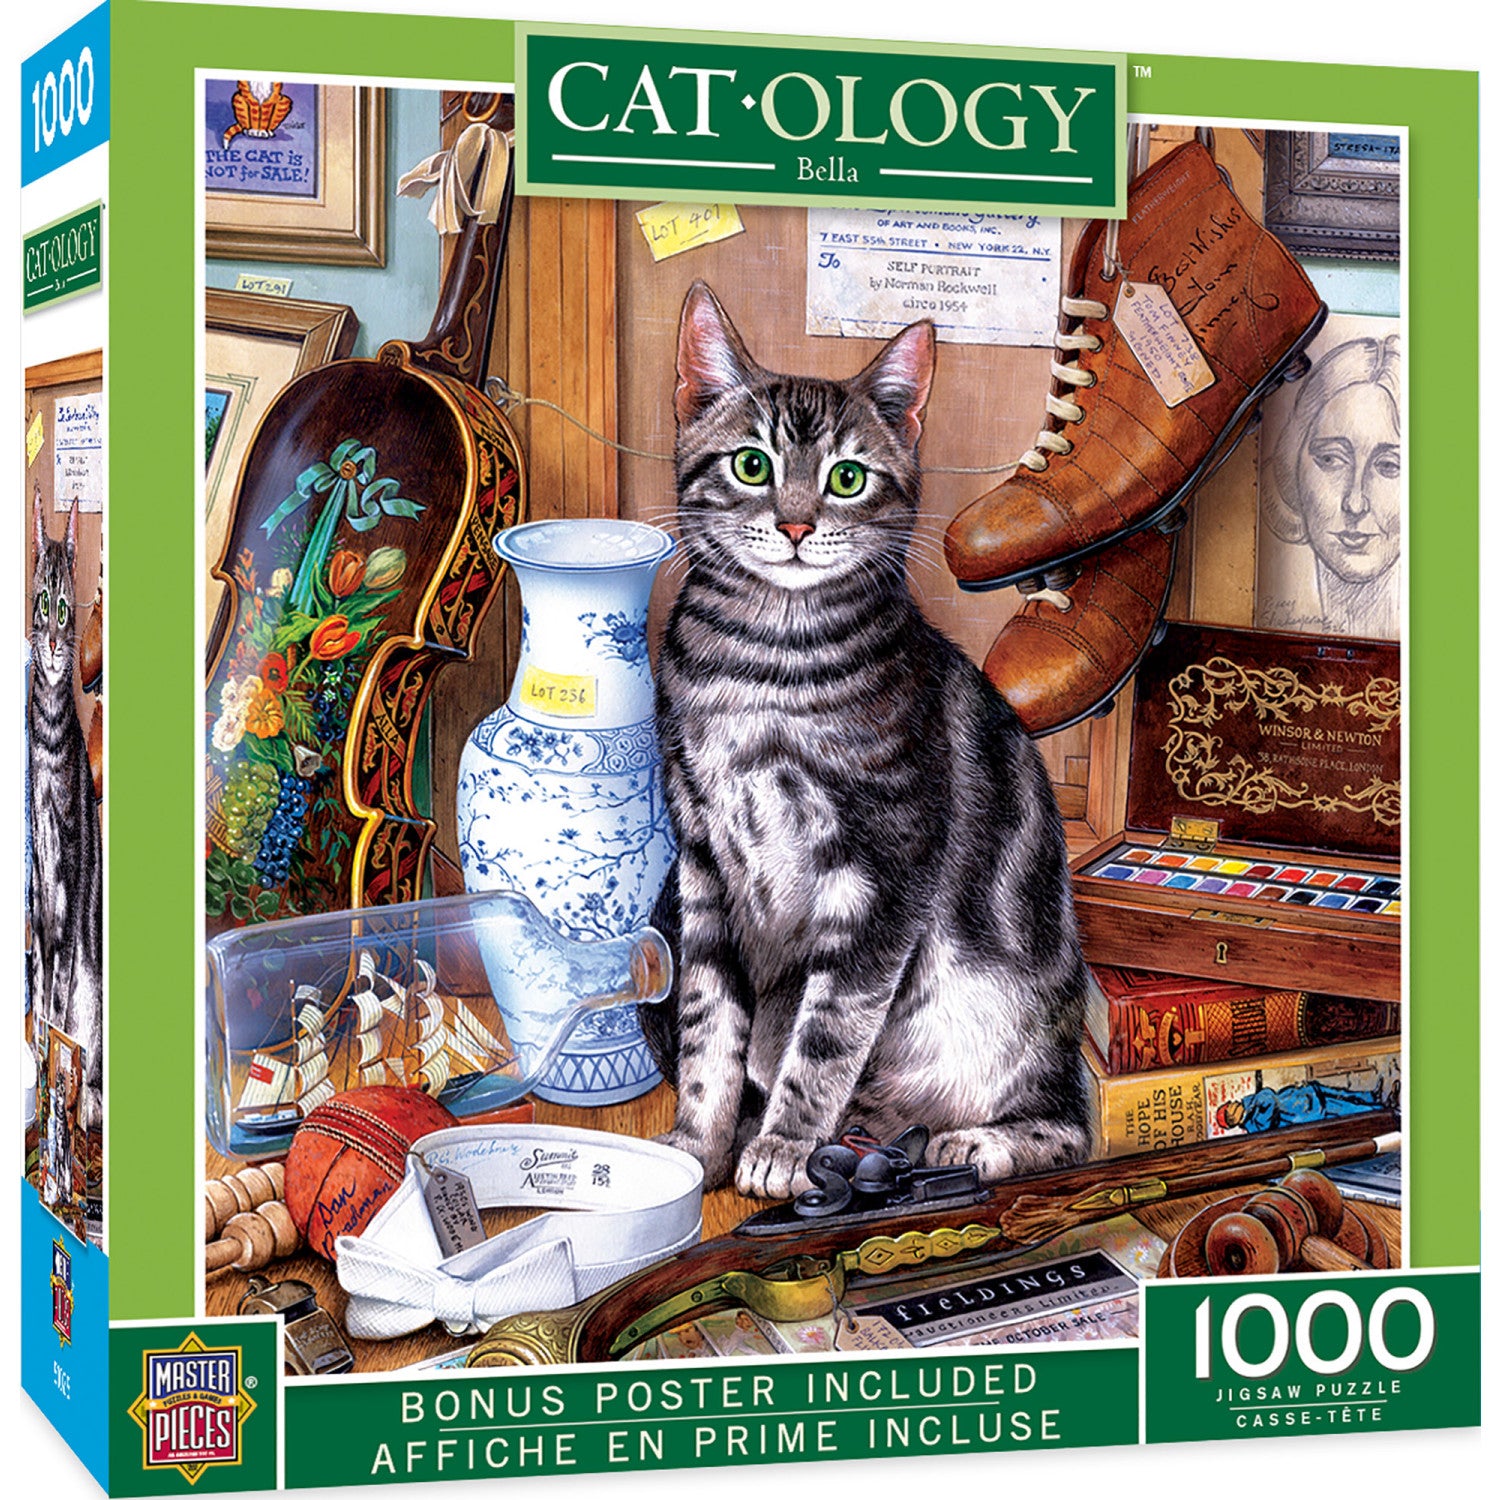 Catology - Bella 1000 Piece Puzzle